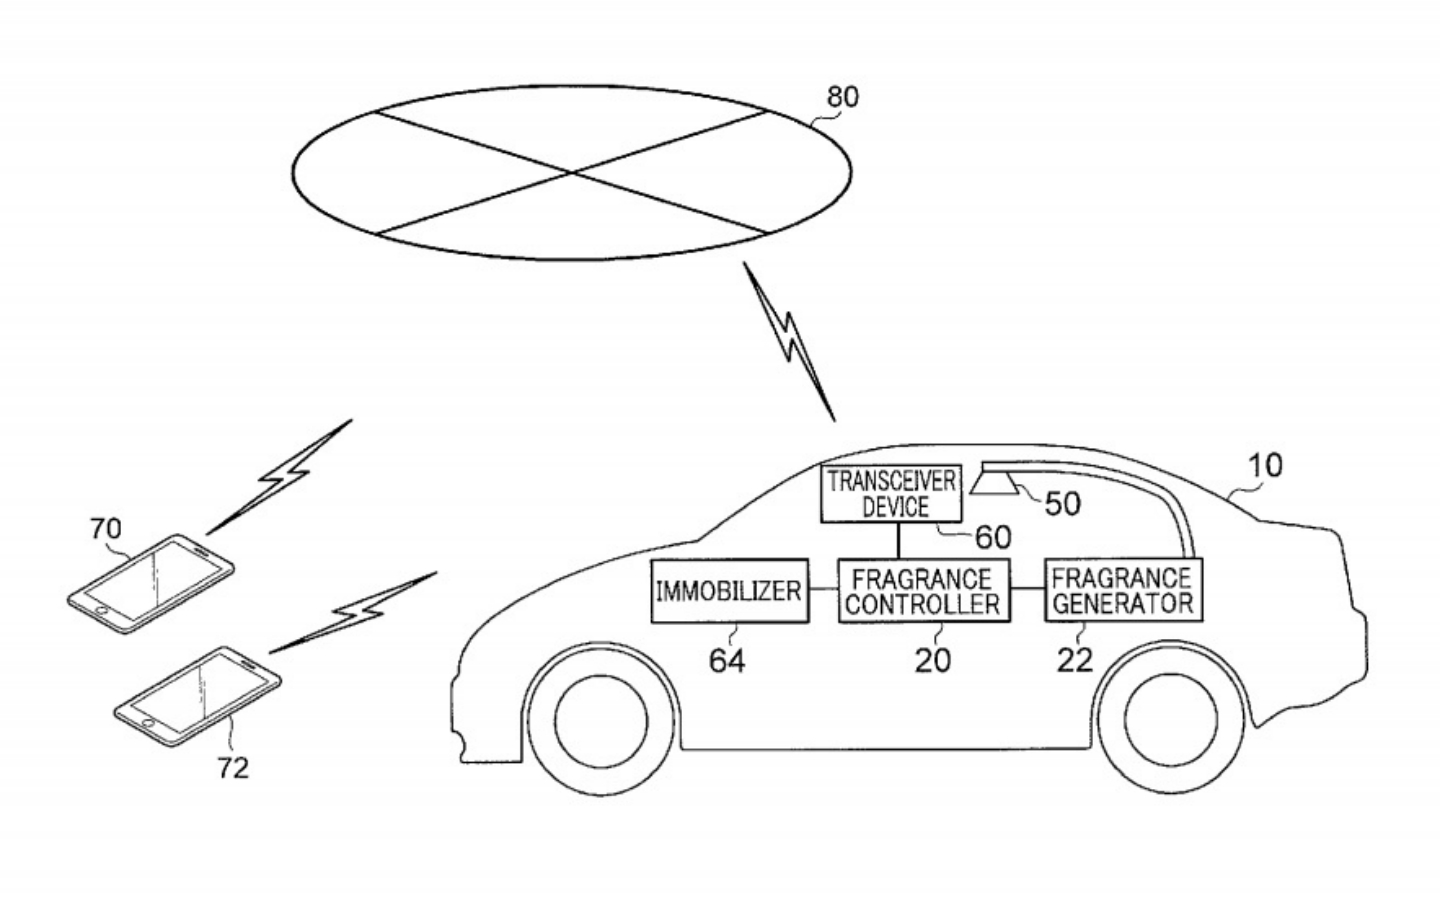 Toyota patents thief-deterring in-car tear gas dispenser